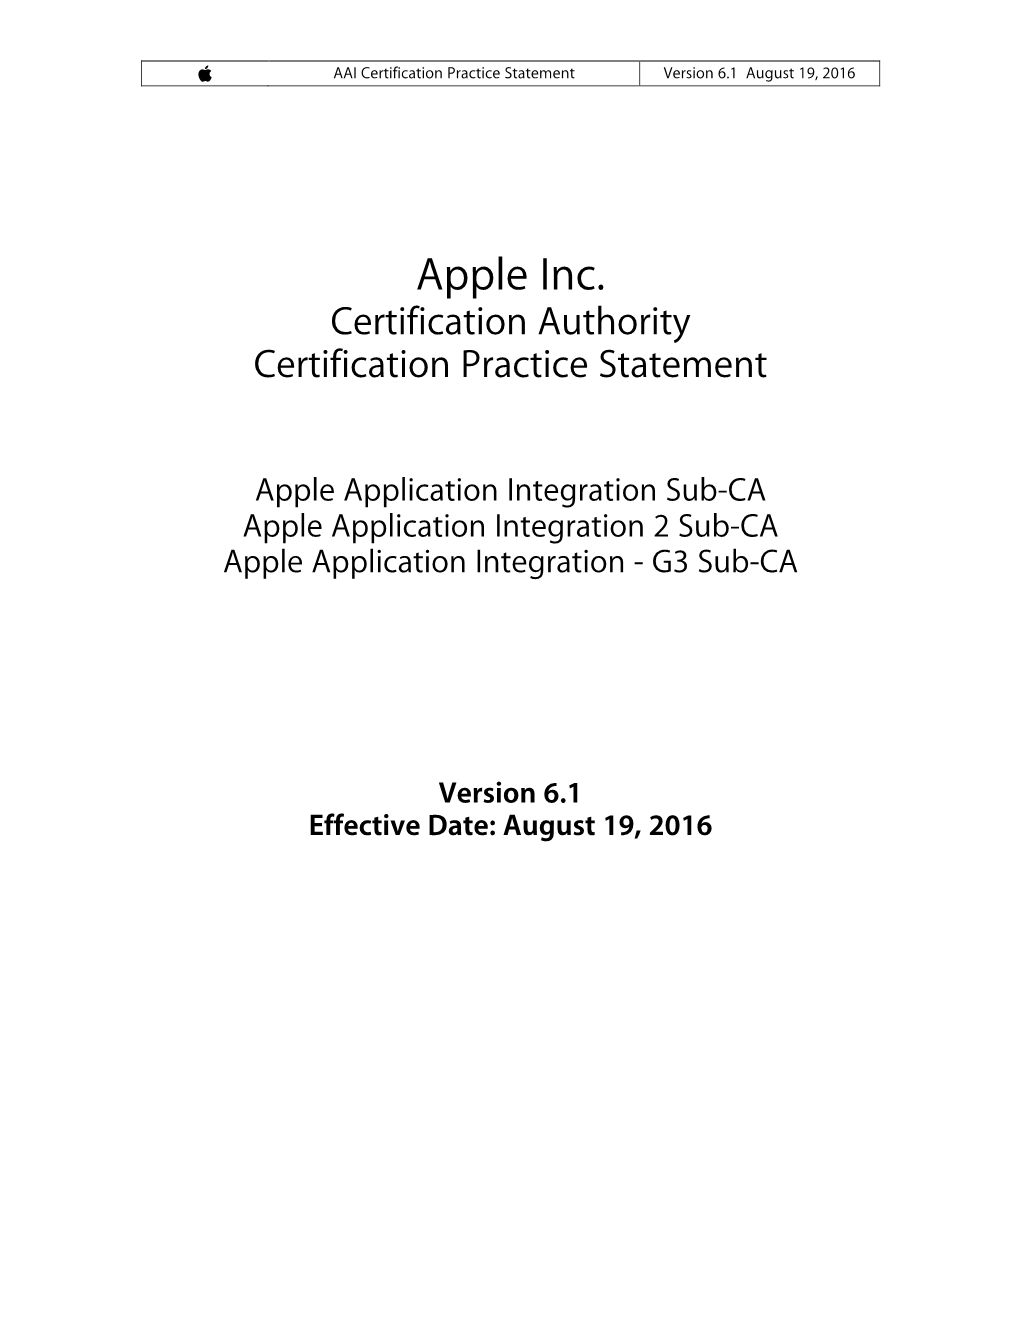 Apple Inc. Certification Authority Certification Practice Statement